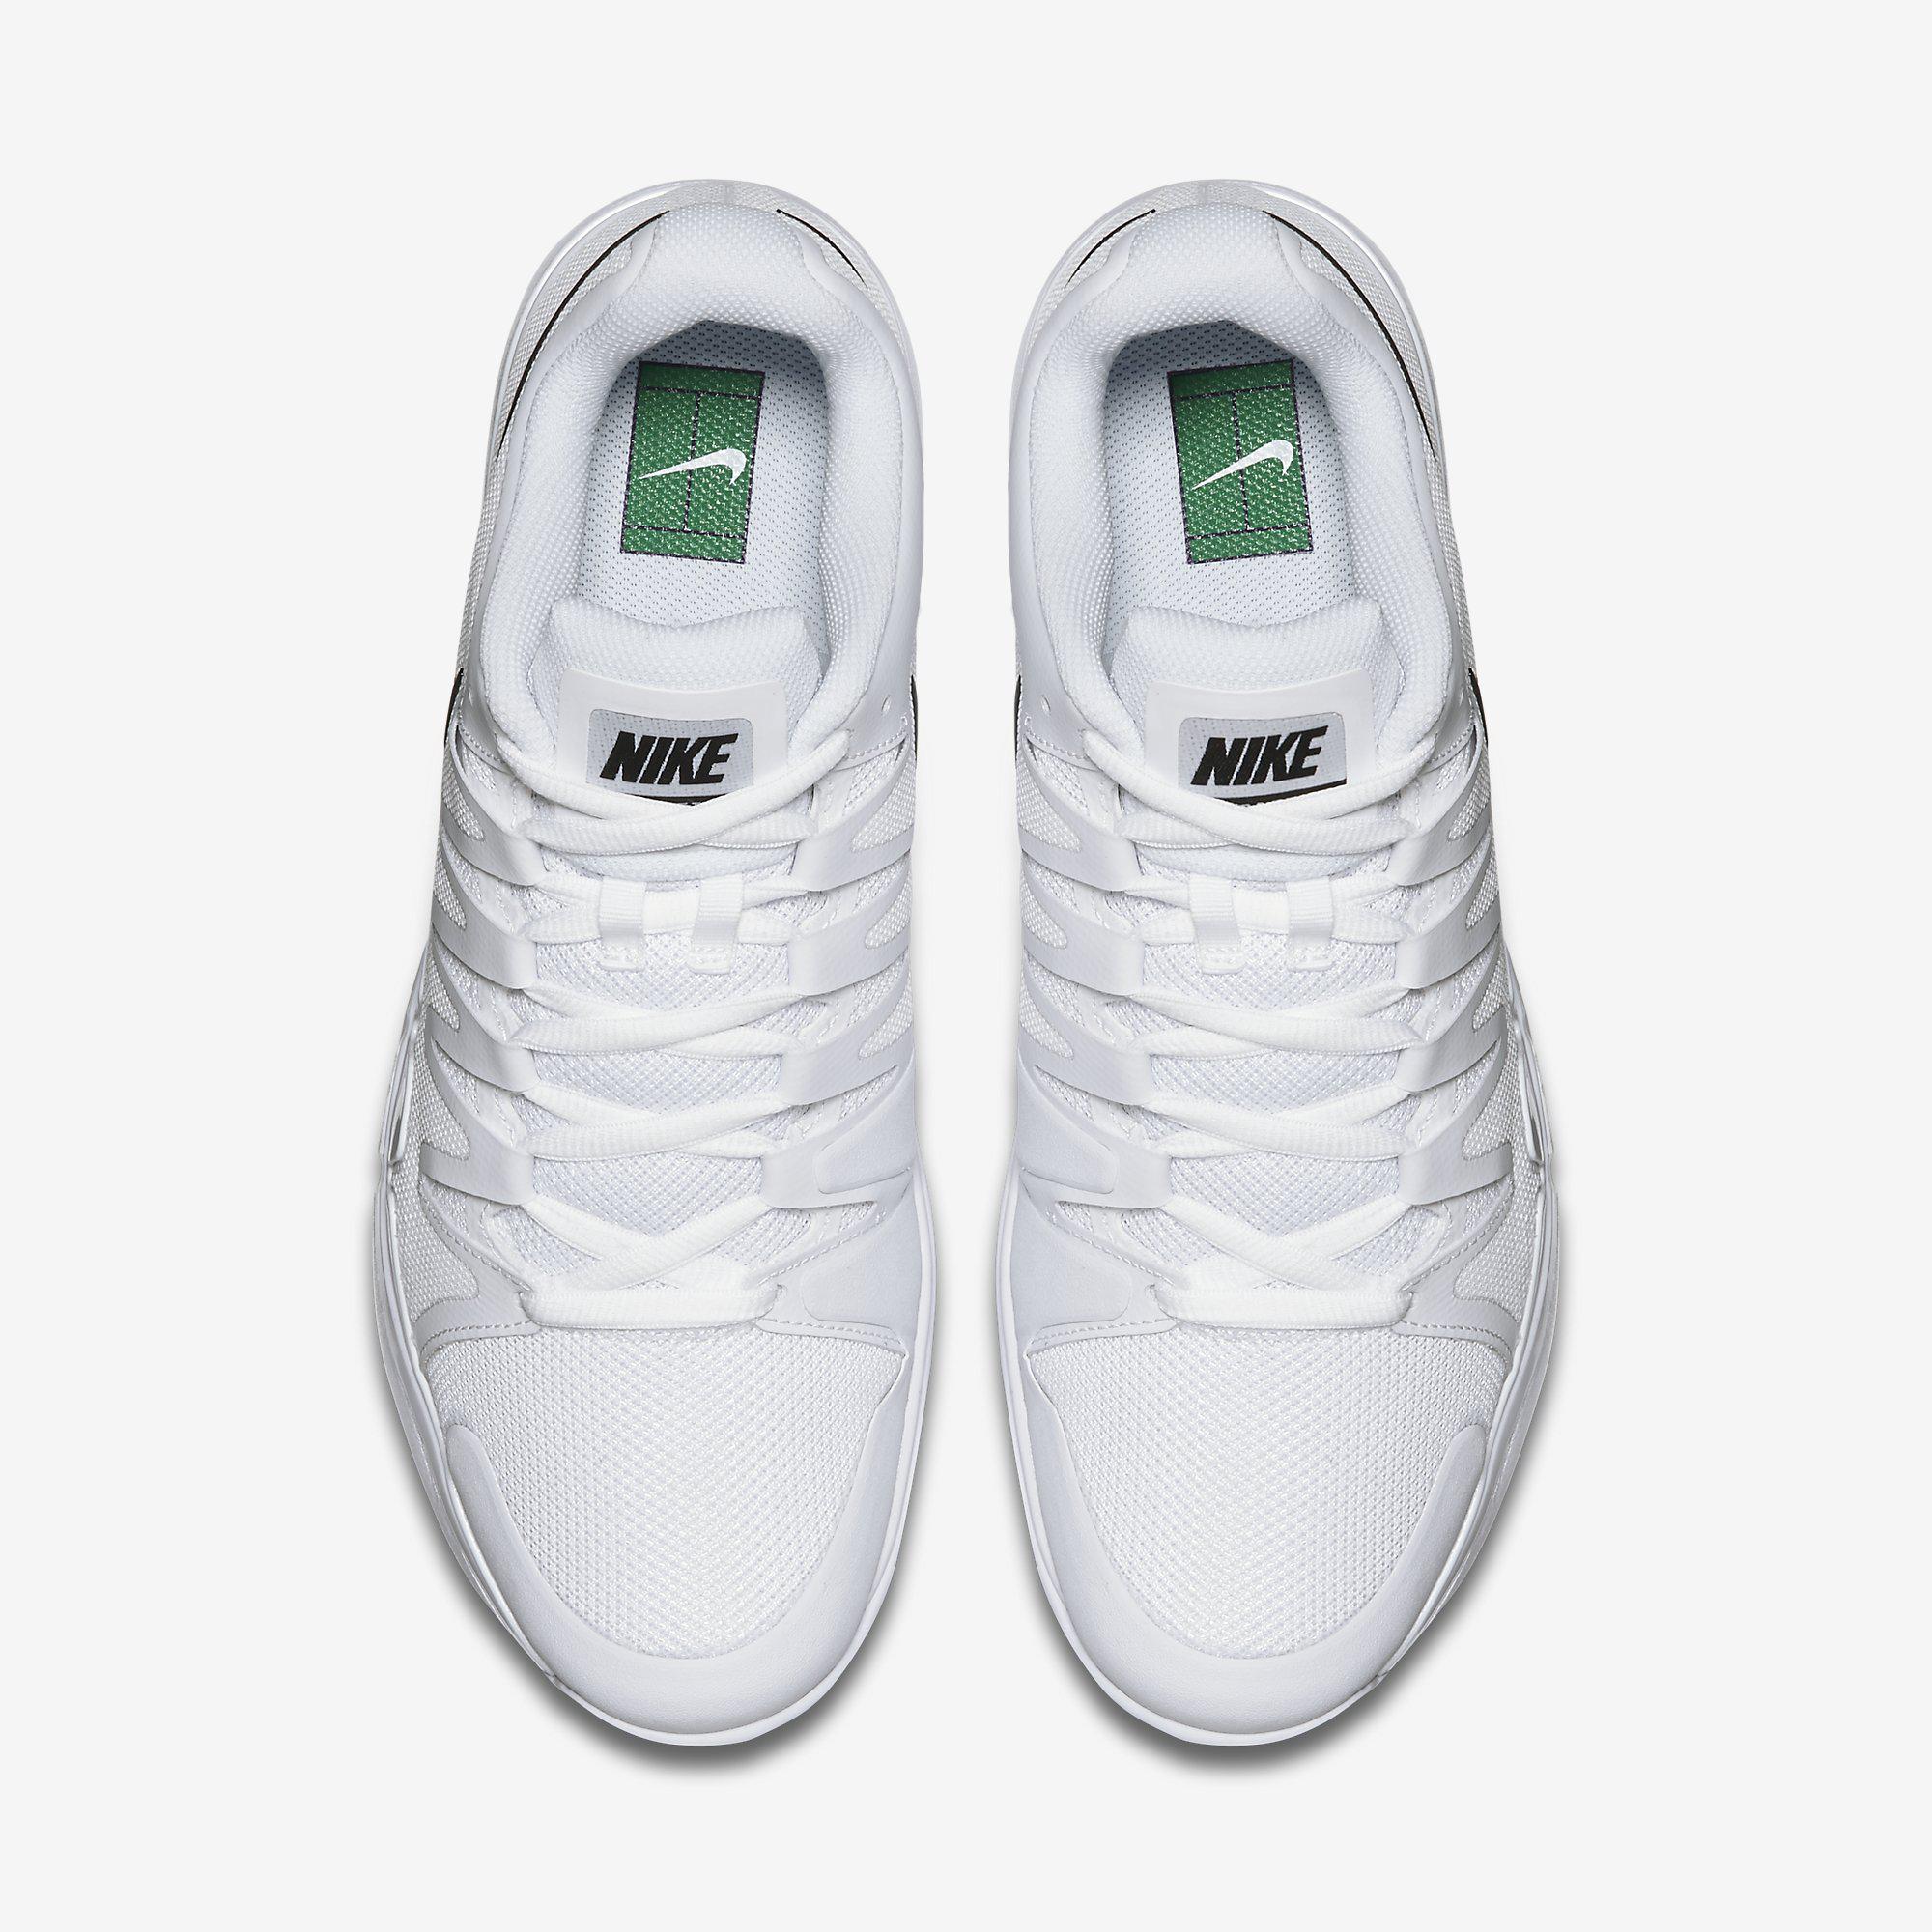 Nike Mens Zoom Vapor 9.5 Tour Limited Edition Tennis Shoes - White ...